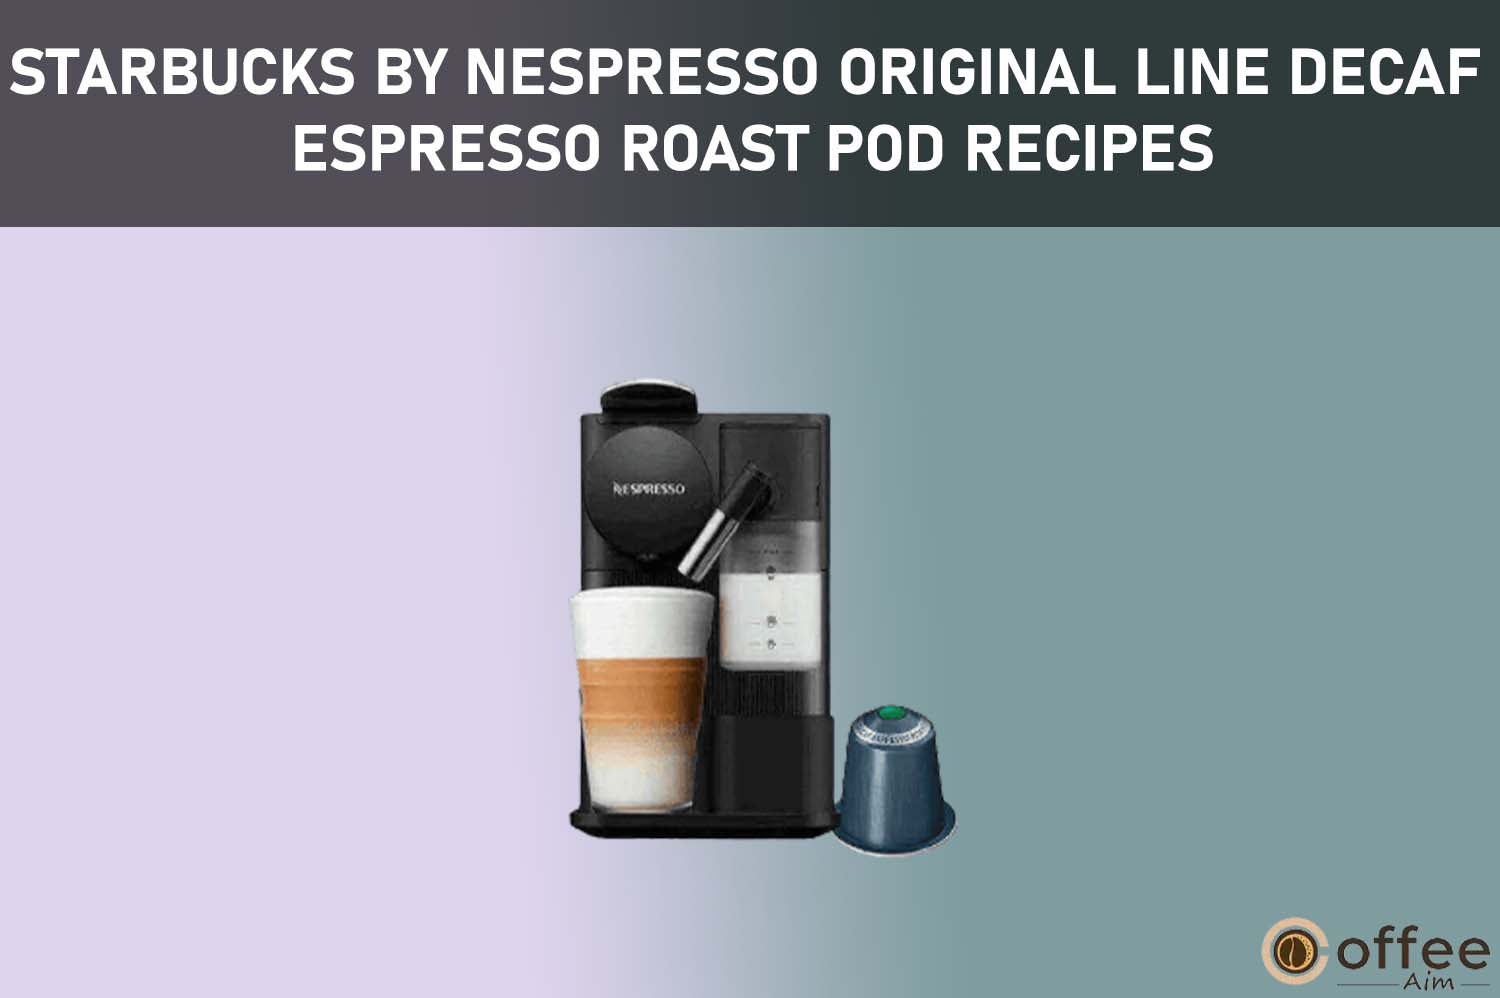 Featured image for the article "Starbucks by Nespresso Original Line Decaf Espresso Roast Pod Recipes"